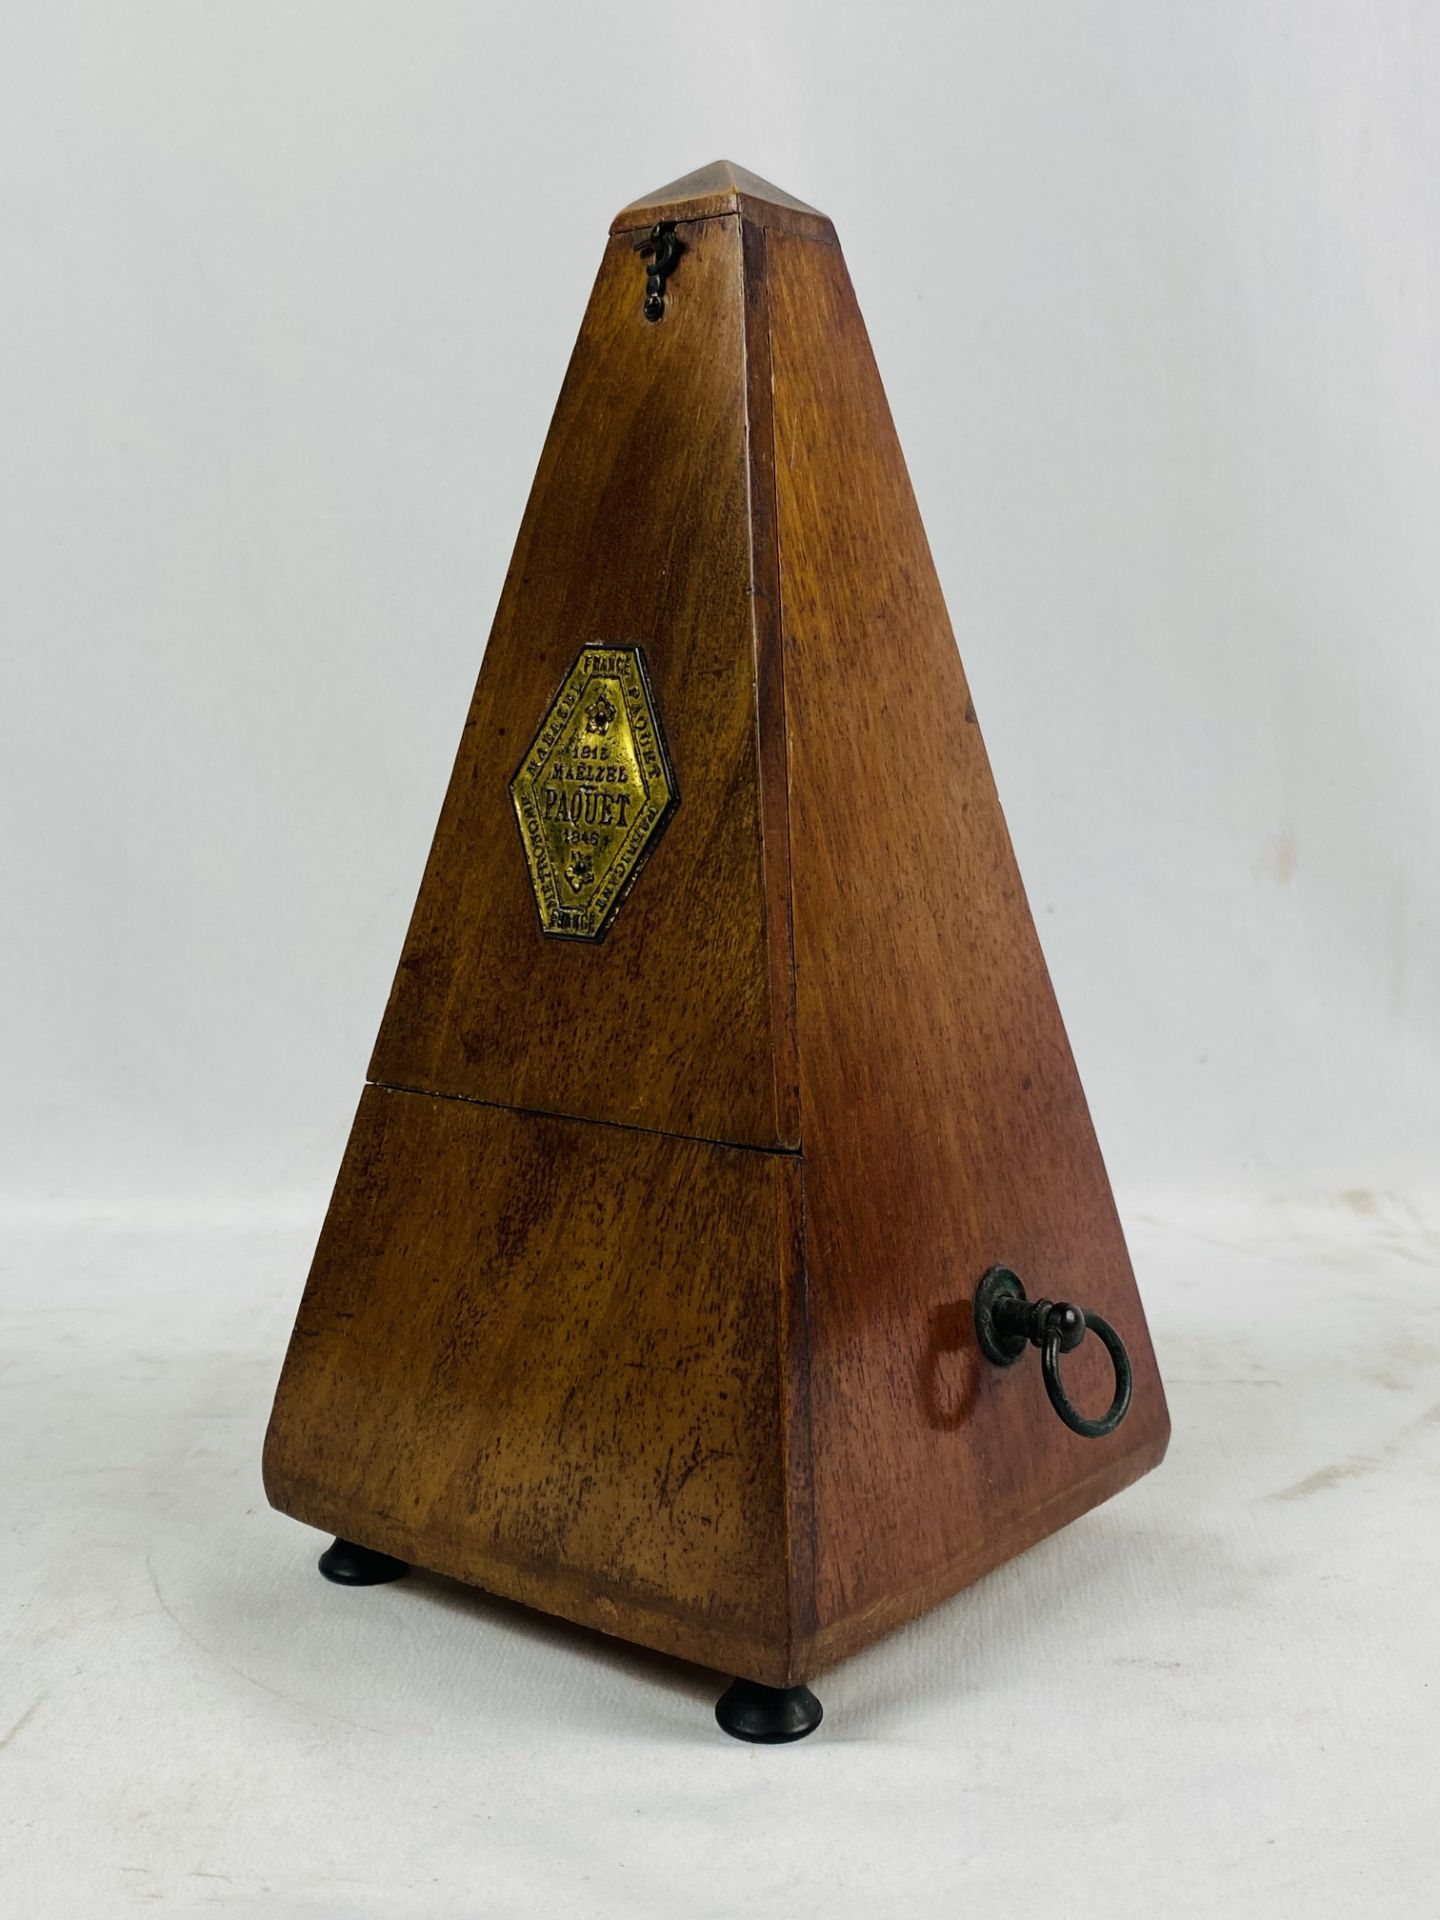 Paquet clockwork metronome - Image 6 of 6